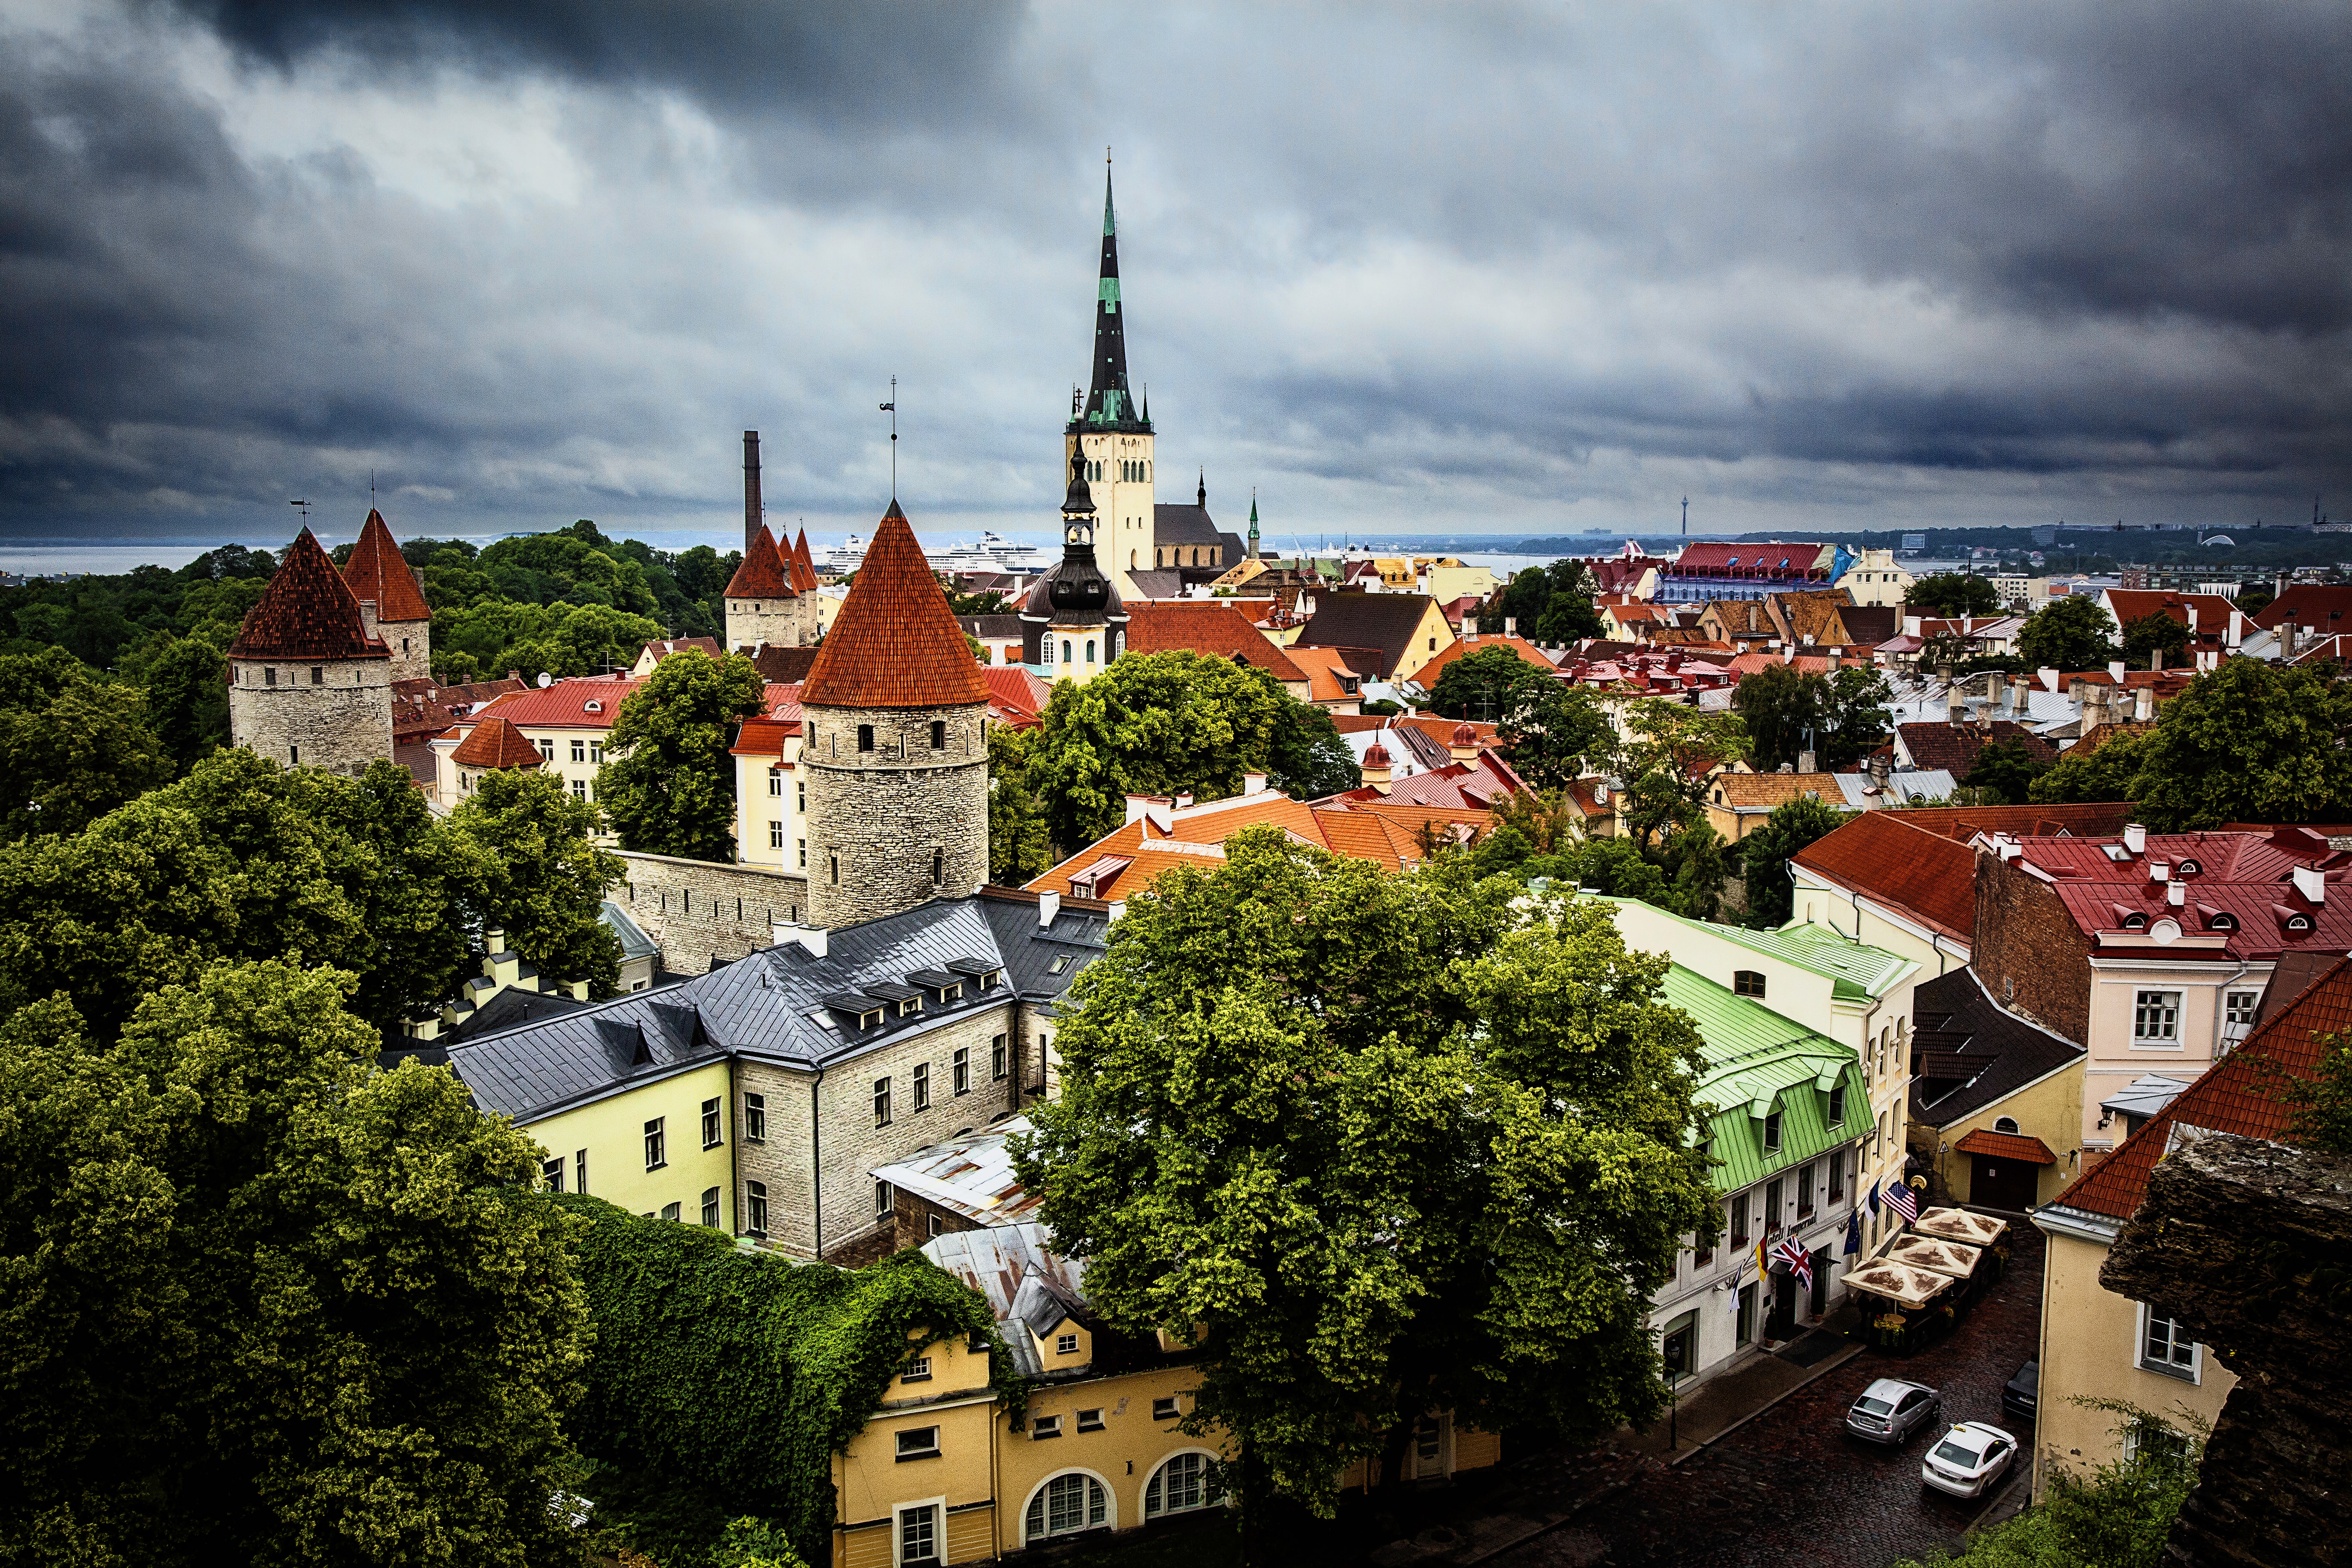 Old city center, Tallinn, Estonia; Photo by Leo Roomets 